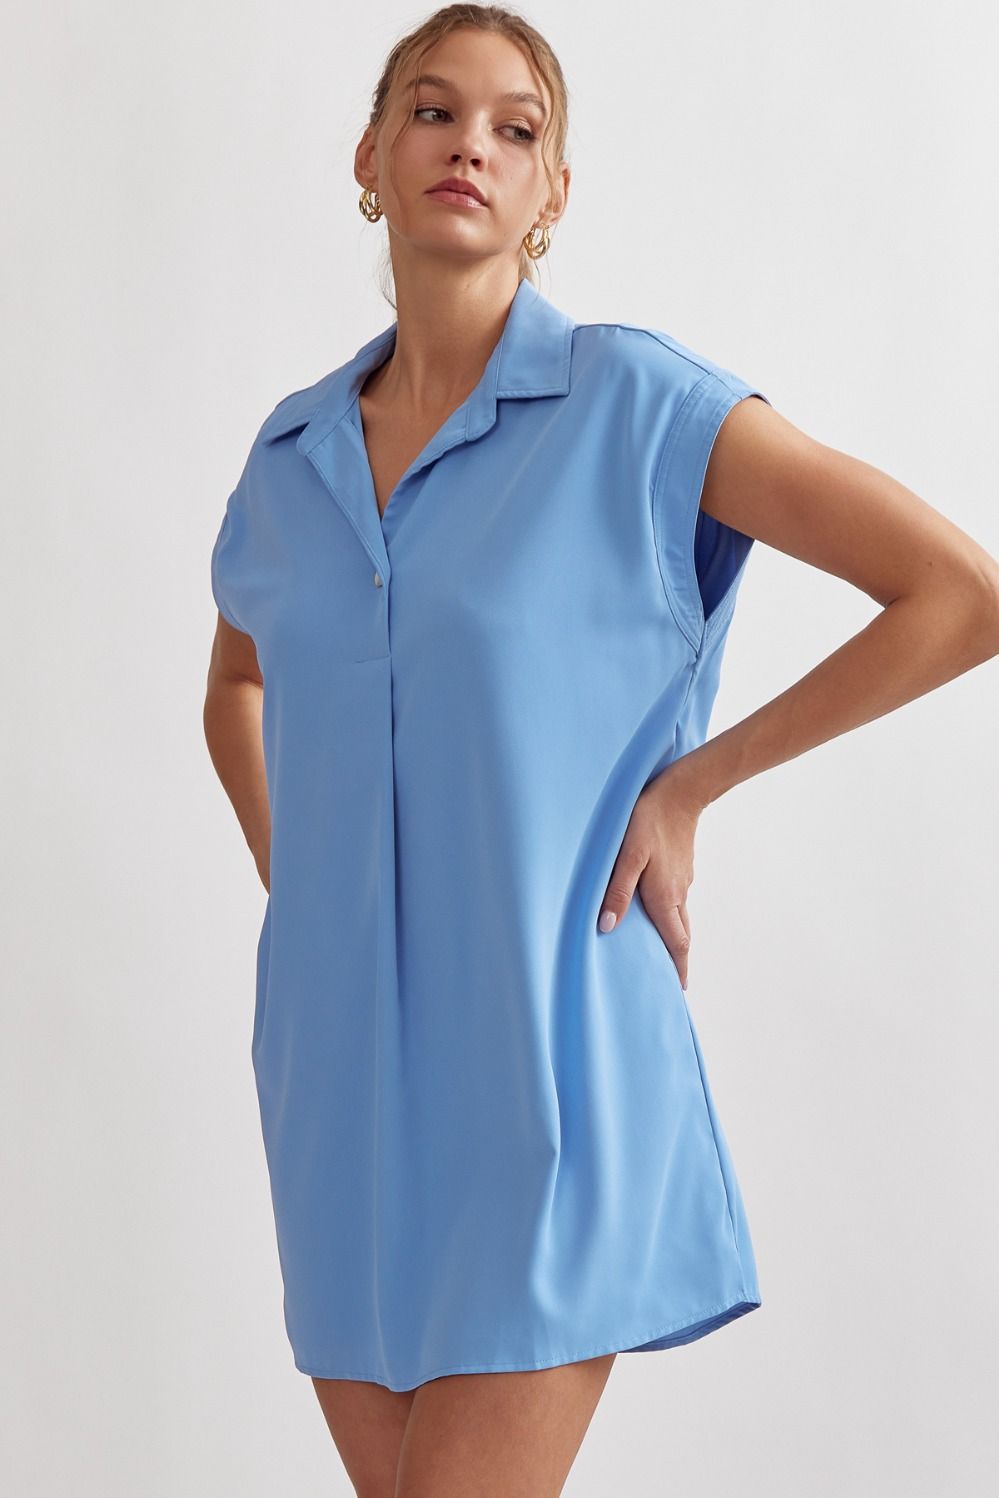 ENTRO INC Women's Dresses BLUE / S Collared Short Sleeve Mini Dress || David's Clothing D20570